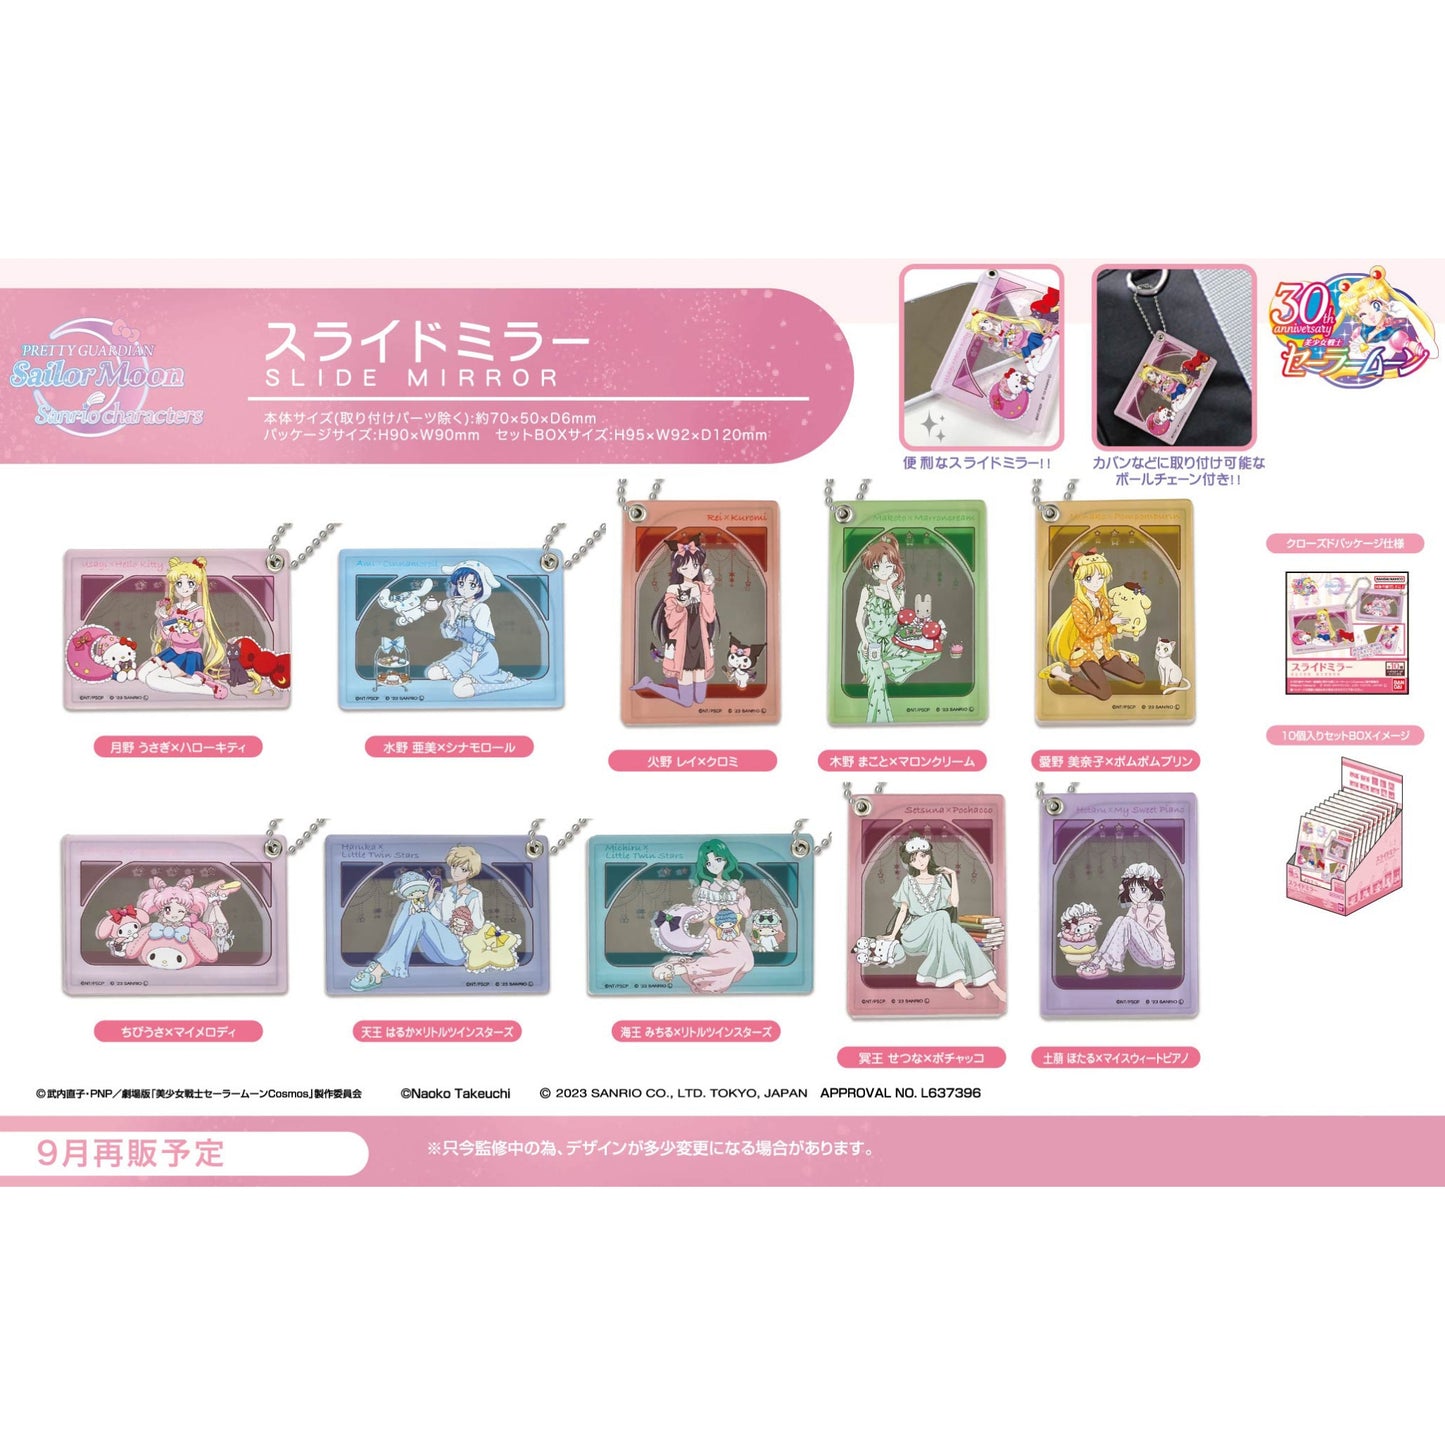 Sailor Moon x Sanrio Characters - Slide Mirror: Chibi-Usa x My Melody